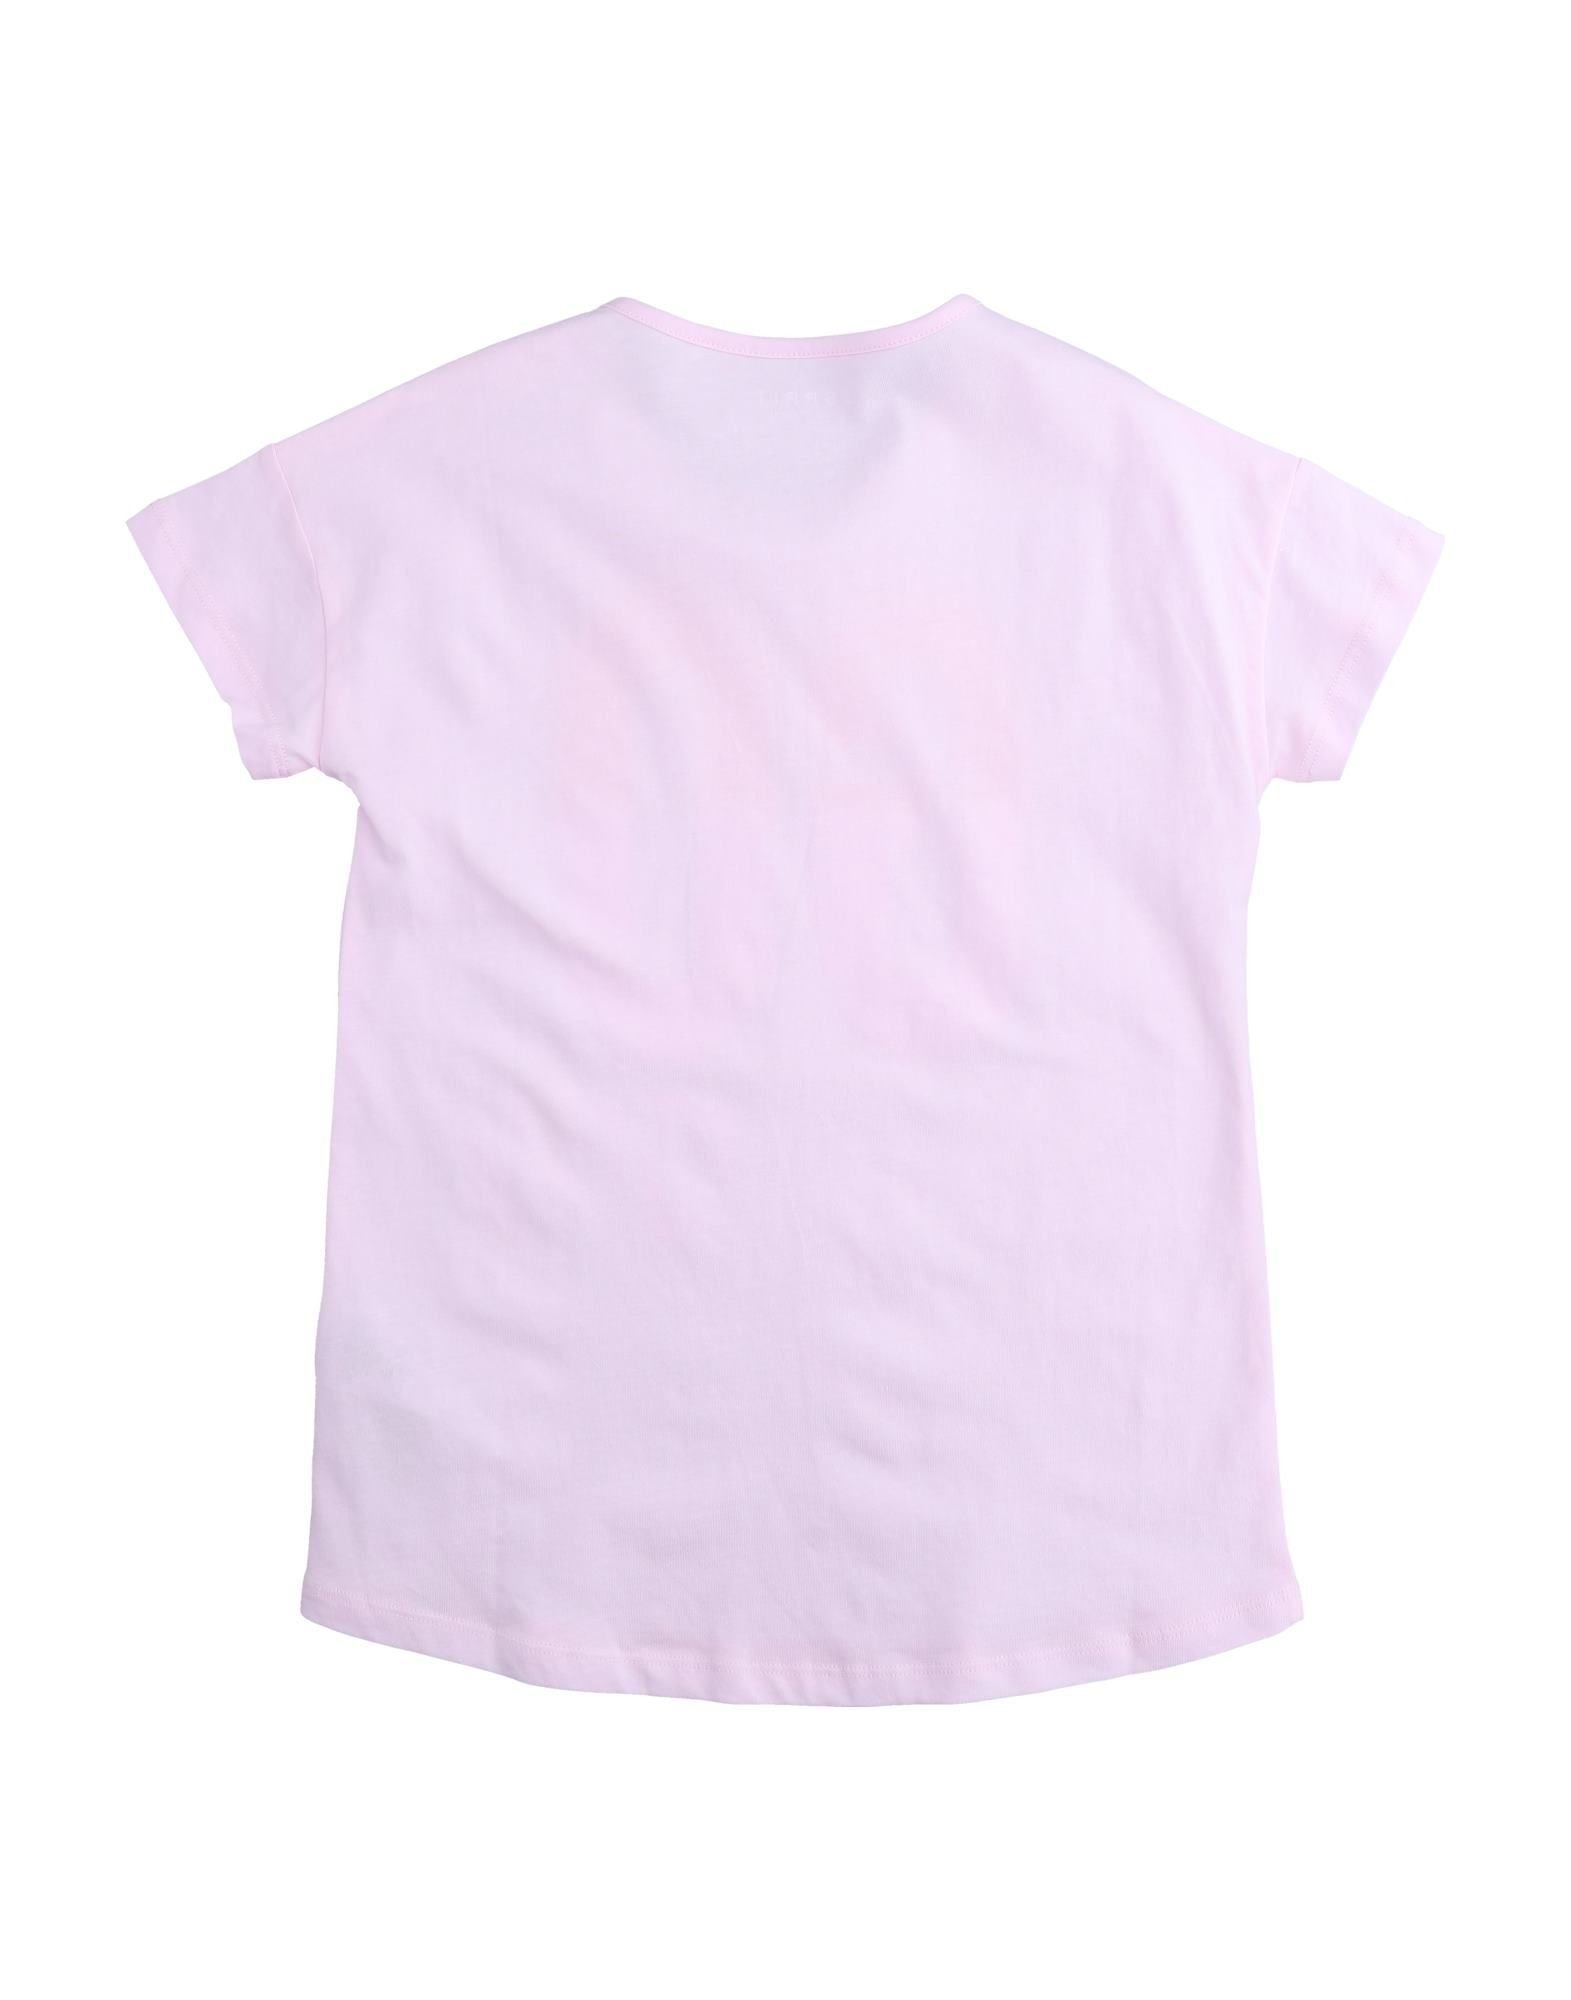 Esprit Girl T-shirts Cotton